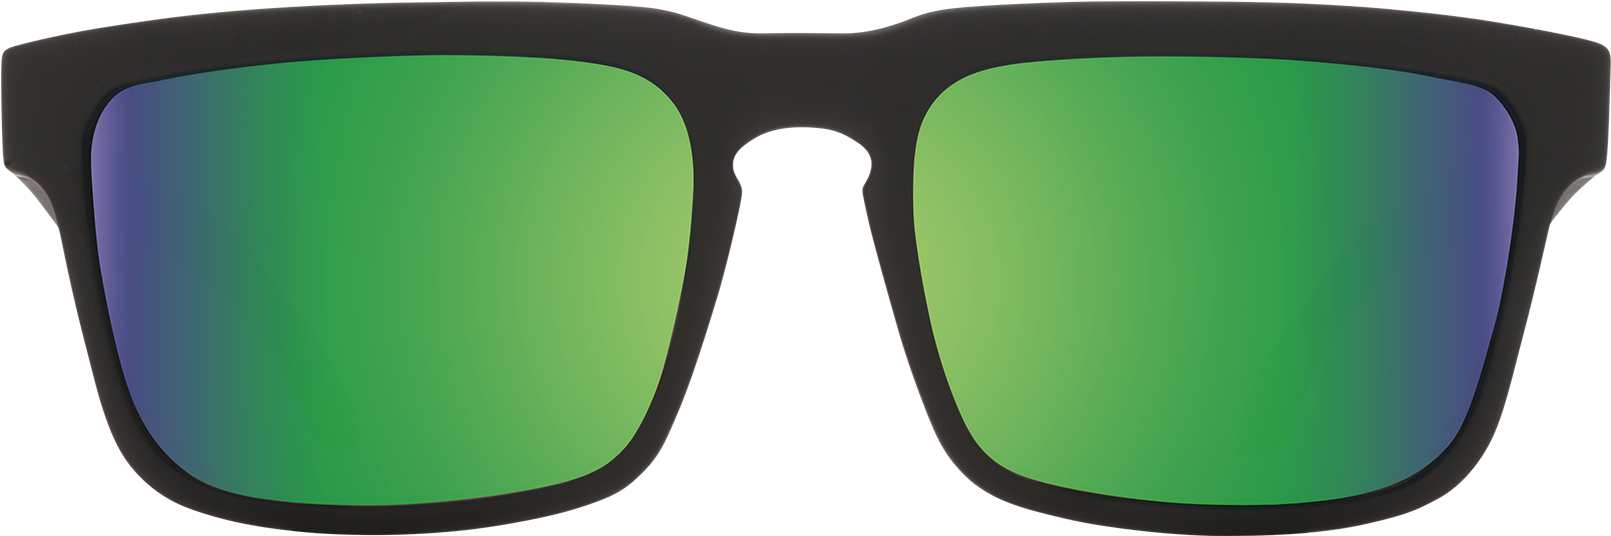 Helm - Sunglasses, Hd Png Download